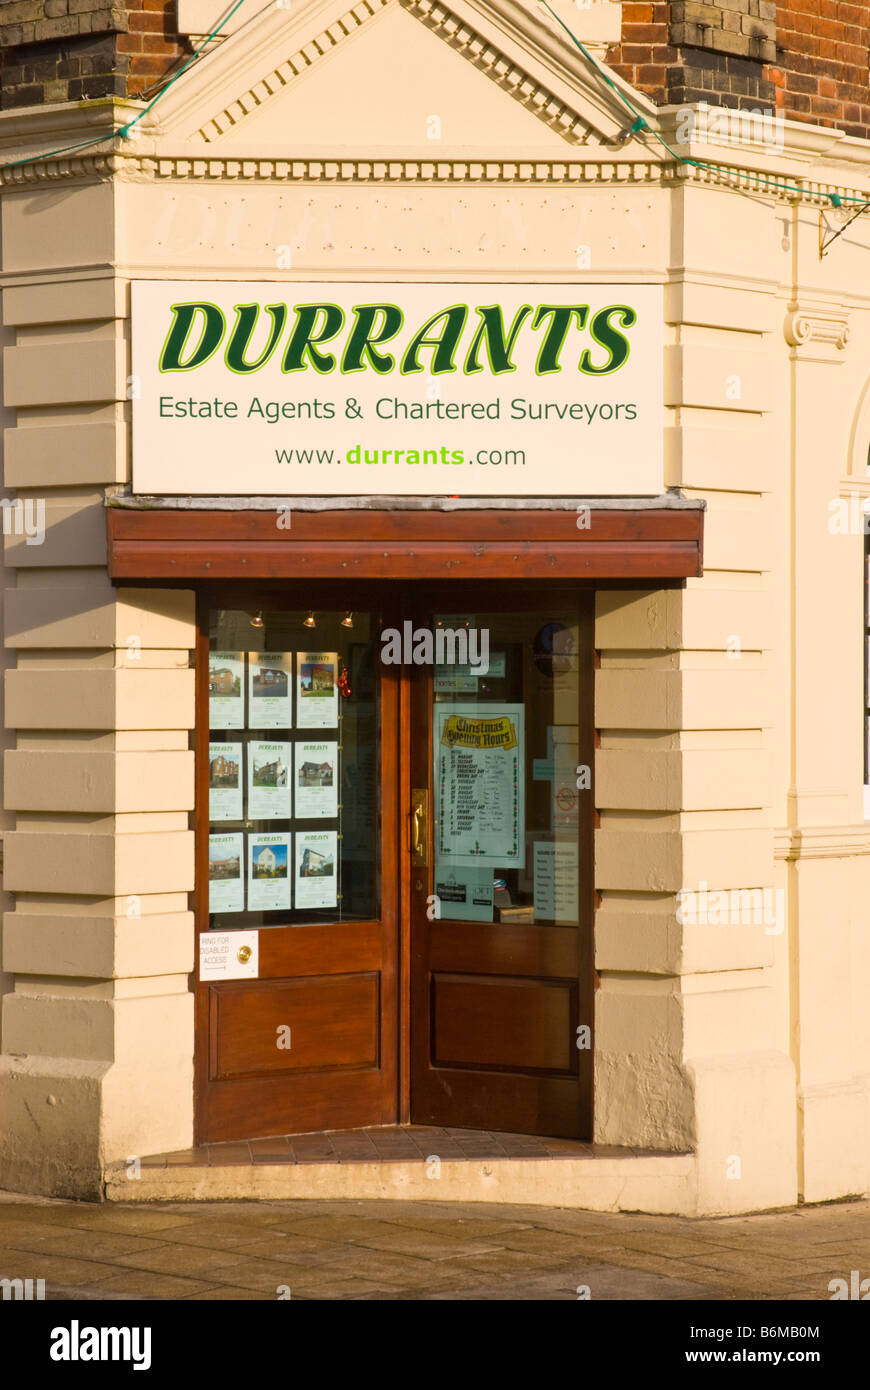 Durrants Immobilienmakler & chartered Surveyors in der Stadt Beccles, Suffolk, Uk Stockfoto